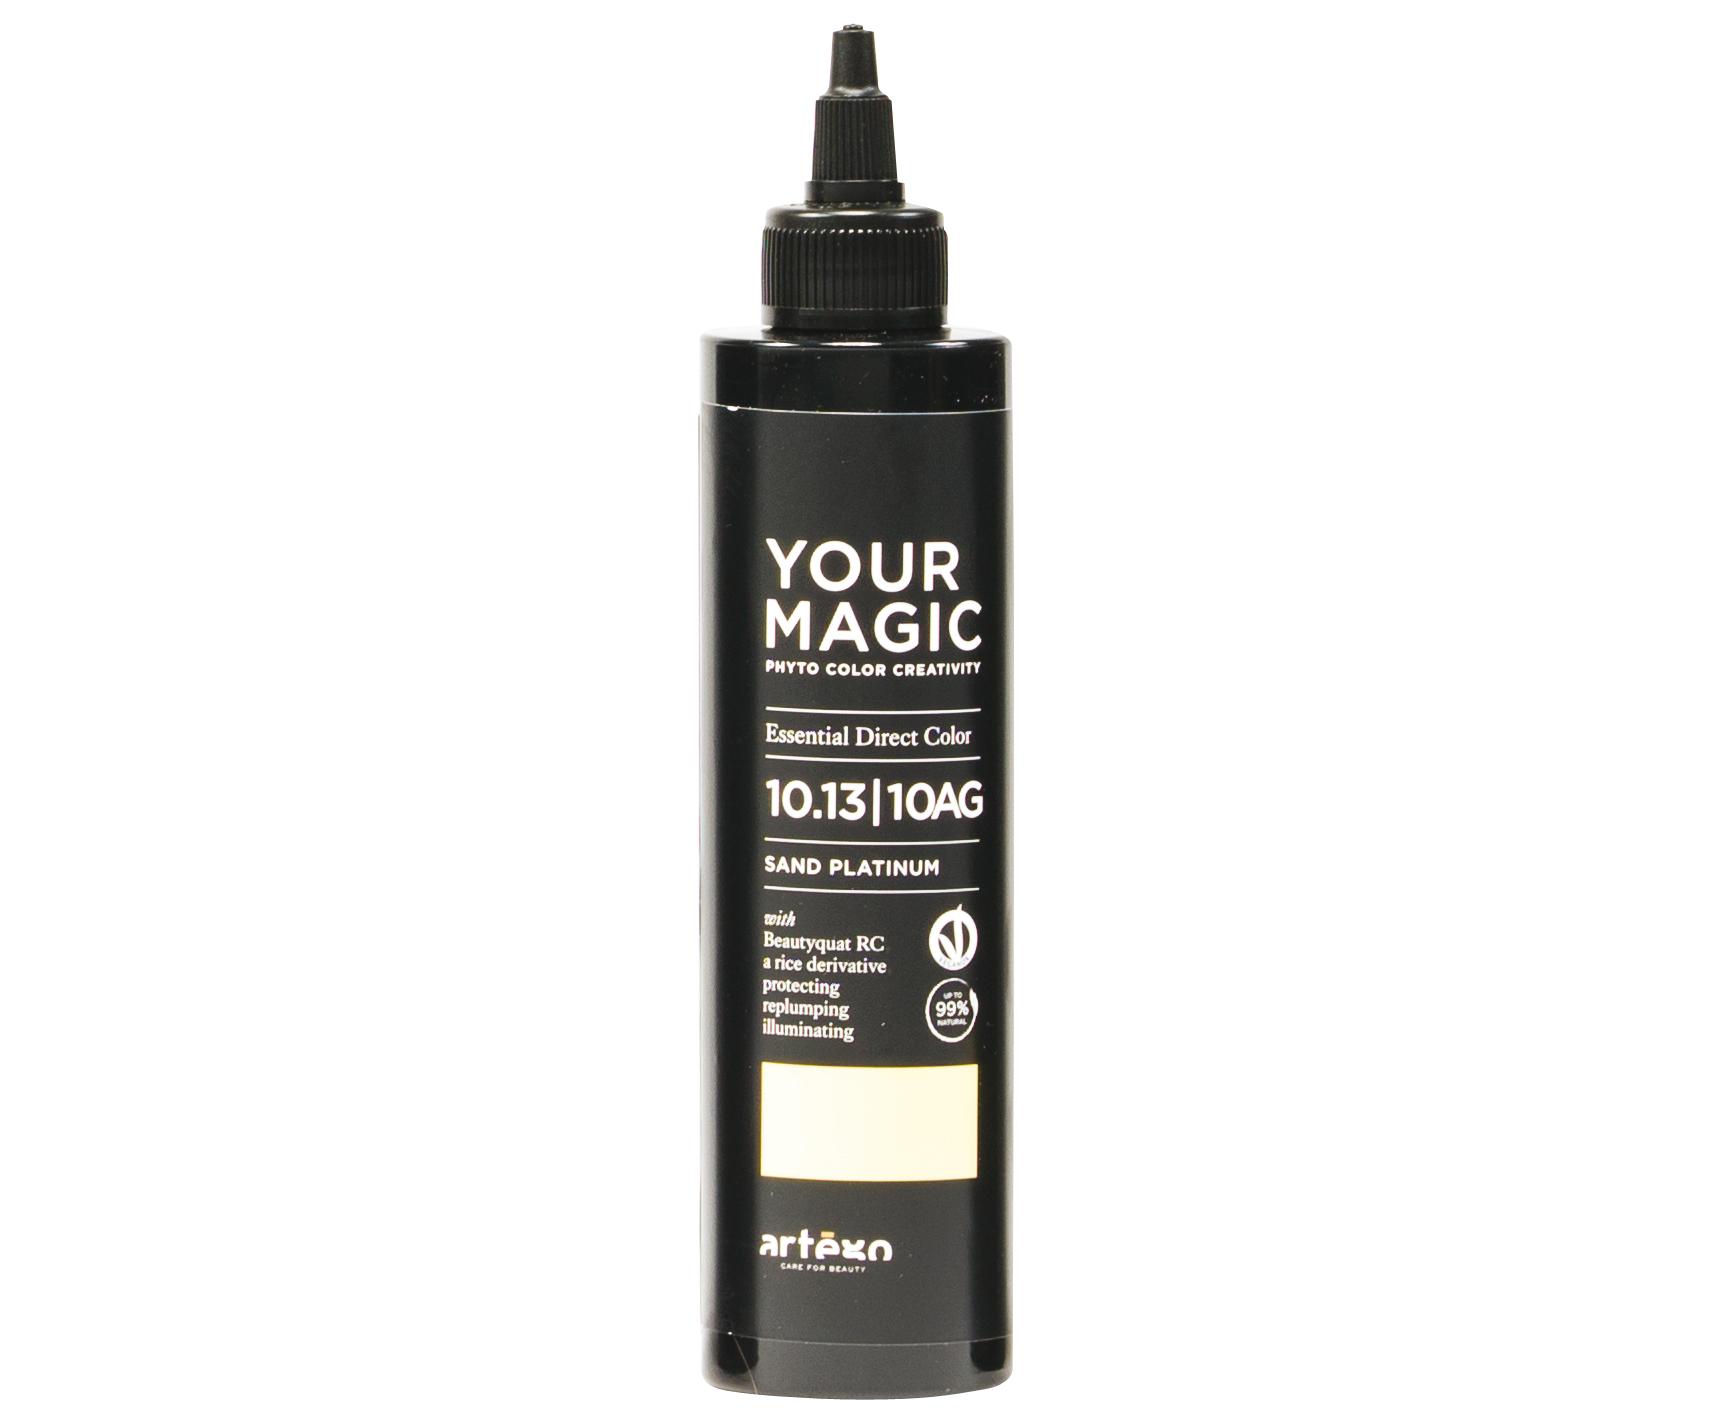 Tónující pigmenty na vlasy Artégo Your Magic 10.13 | 10AG - 200 ml, písková (0165260) + DÁREK ZDARMA